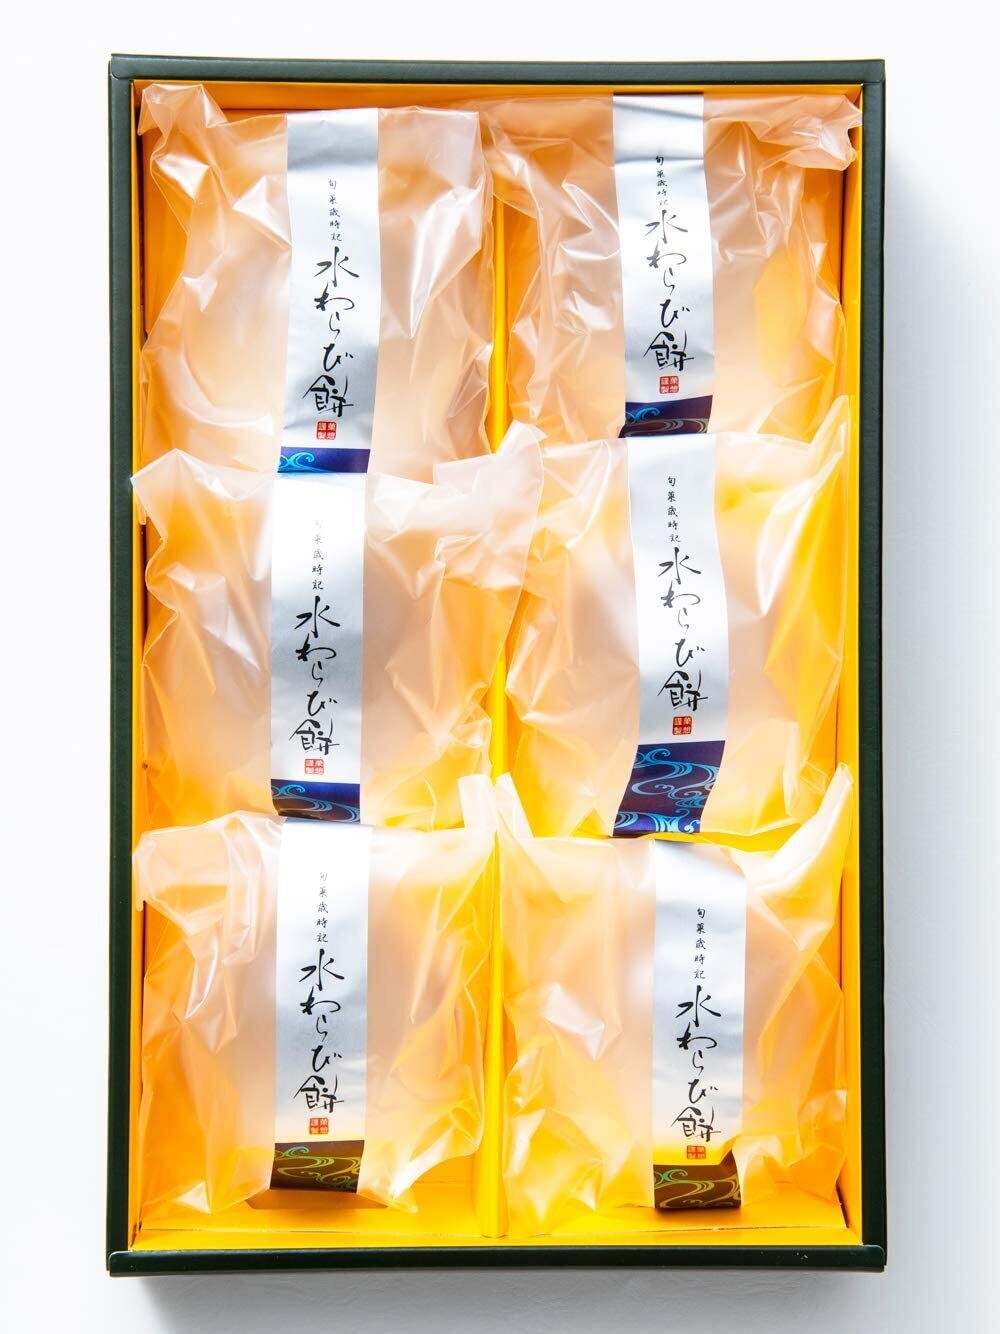 Mizu Warabi Mochi, Transparent, Very Soft Kanten Jelly, 6 pcs, for Gift